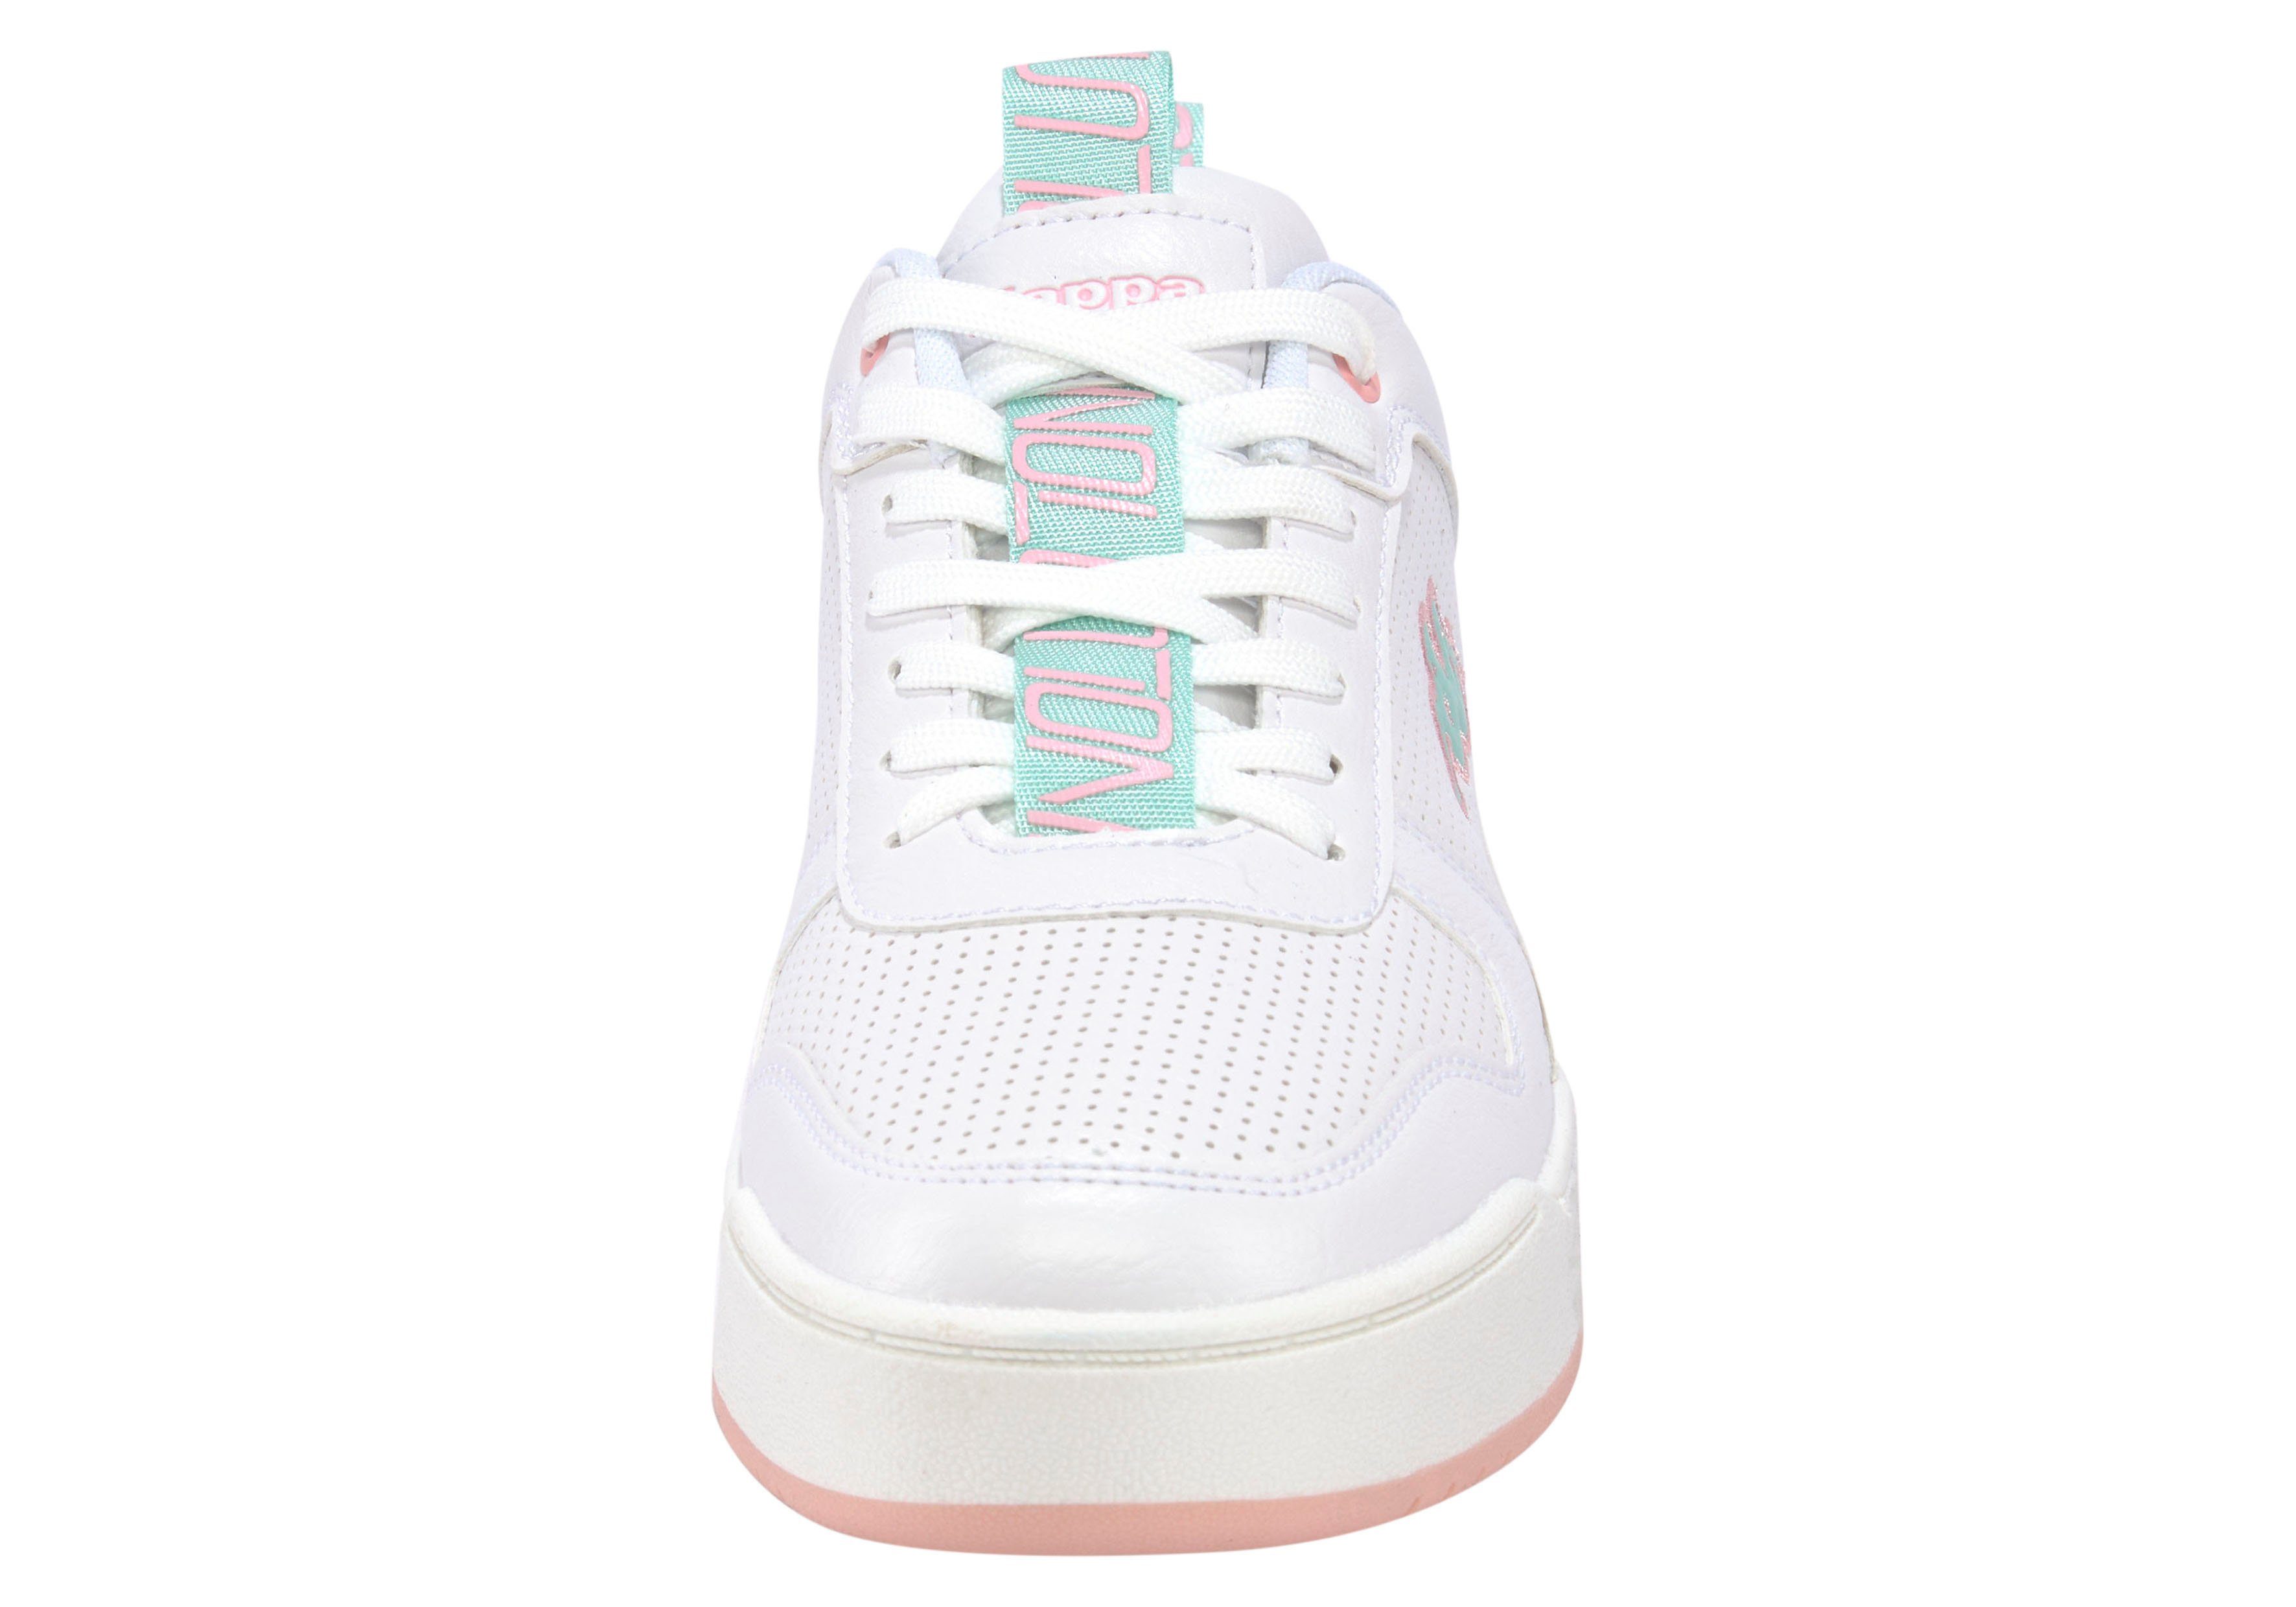 Sneaker Kappa weiß-rosa